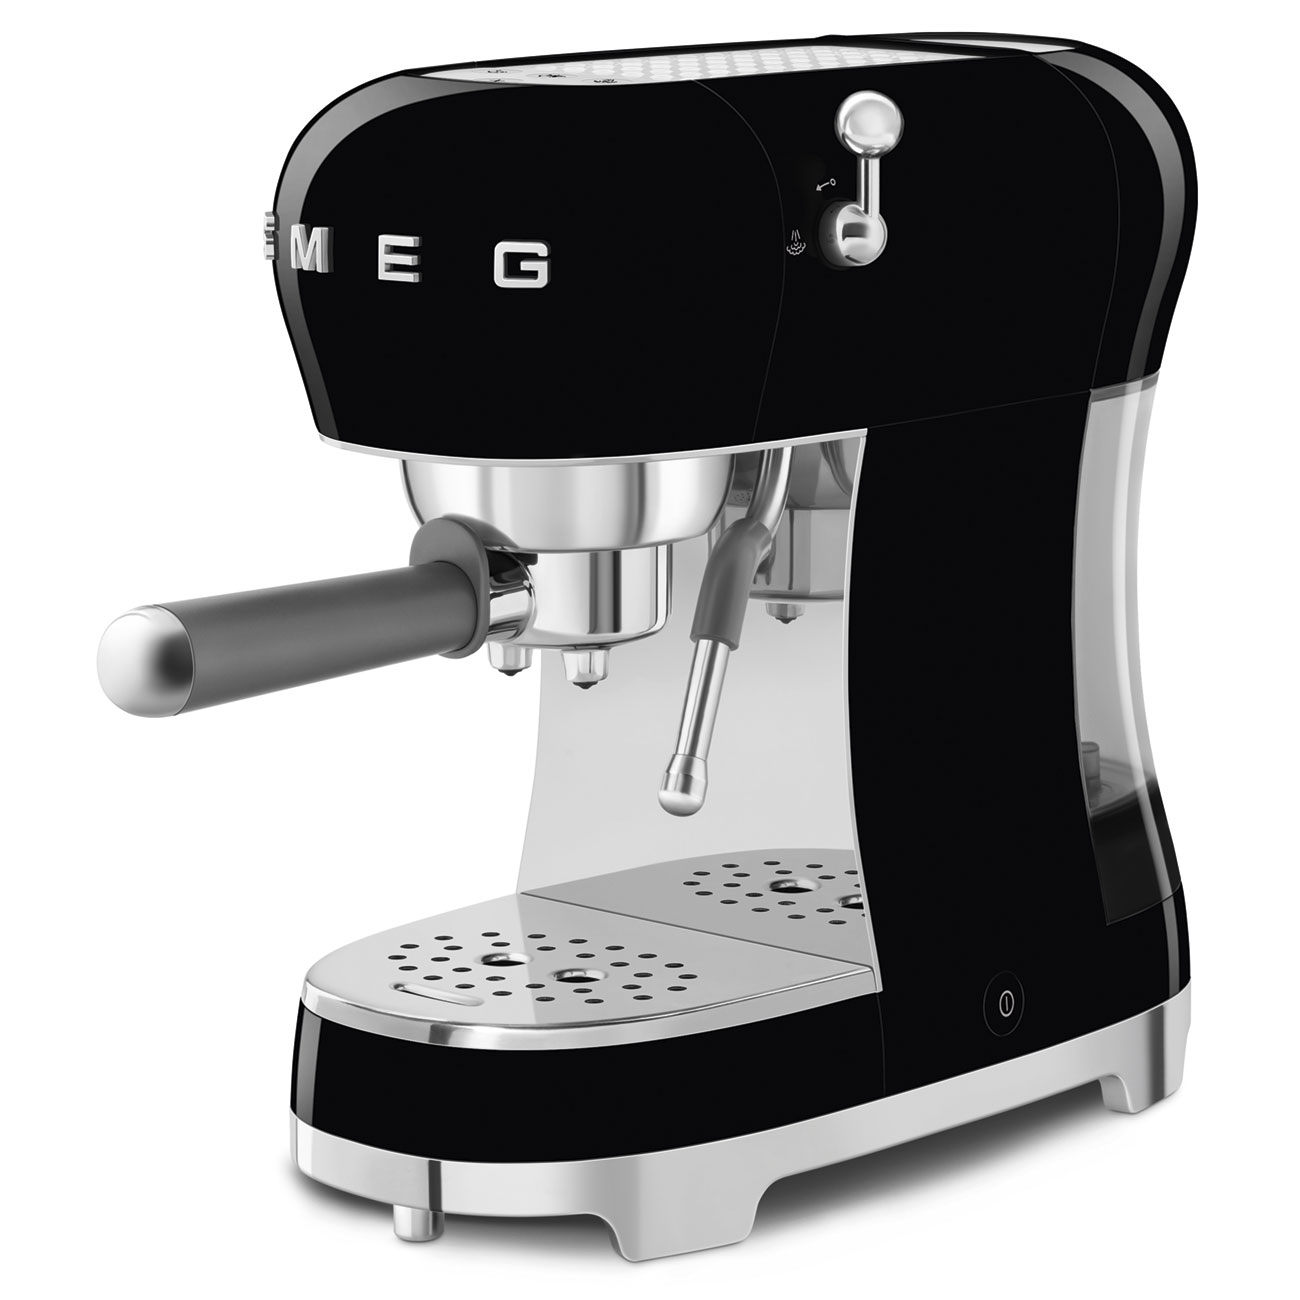 Smeg Black Espresso Manual Coffee Machine with Steam Wand_4